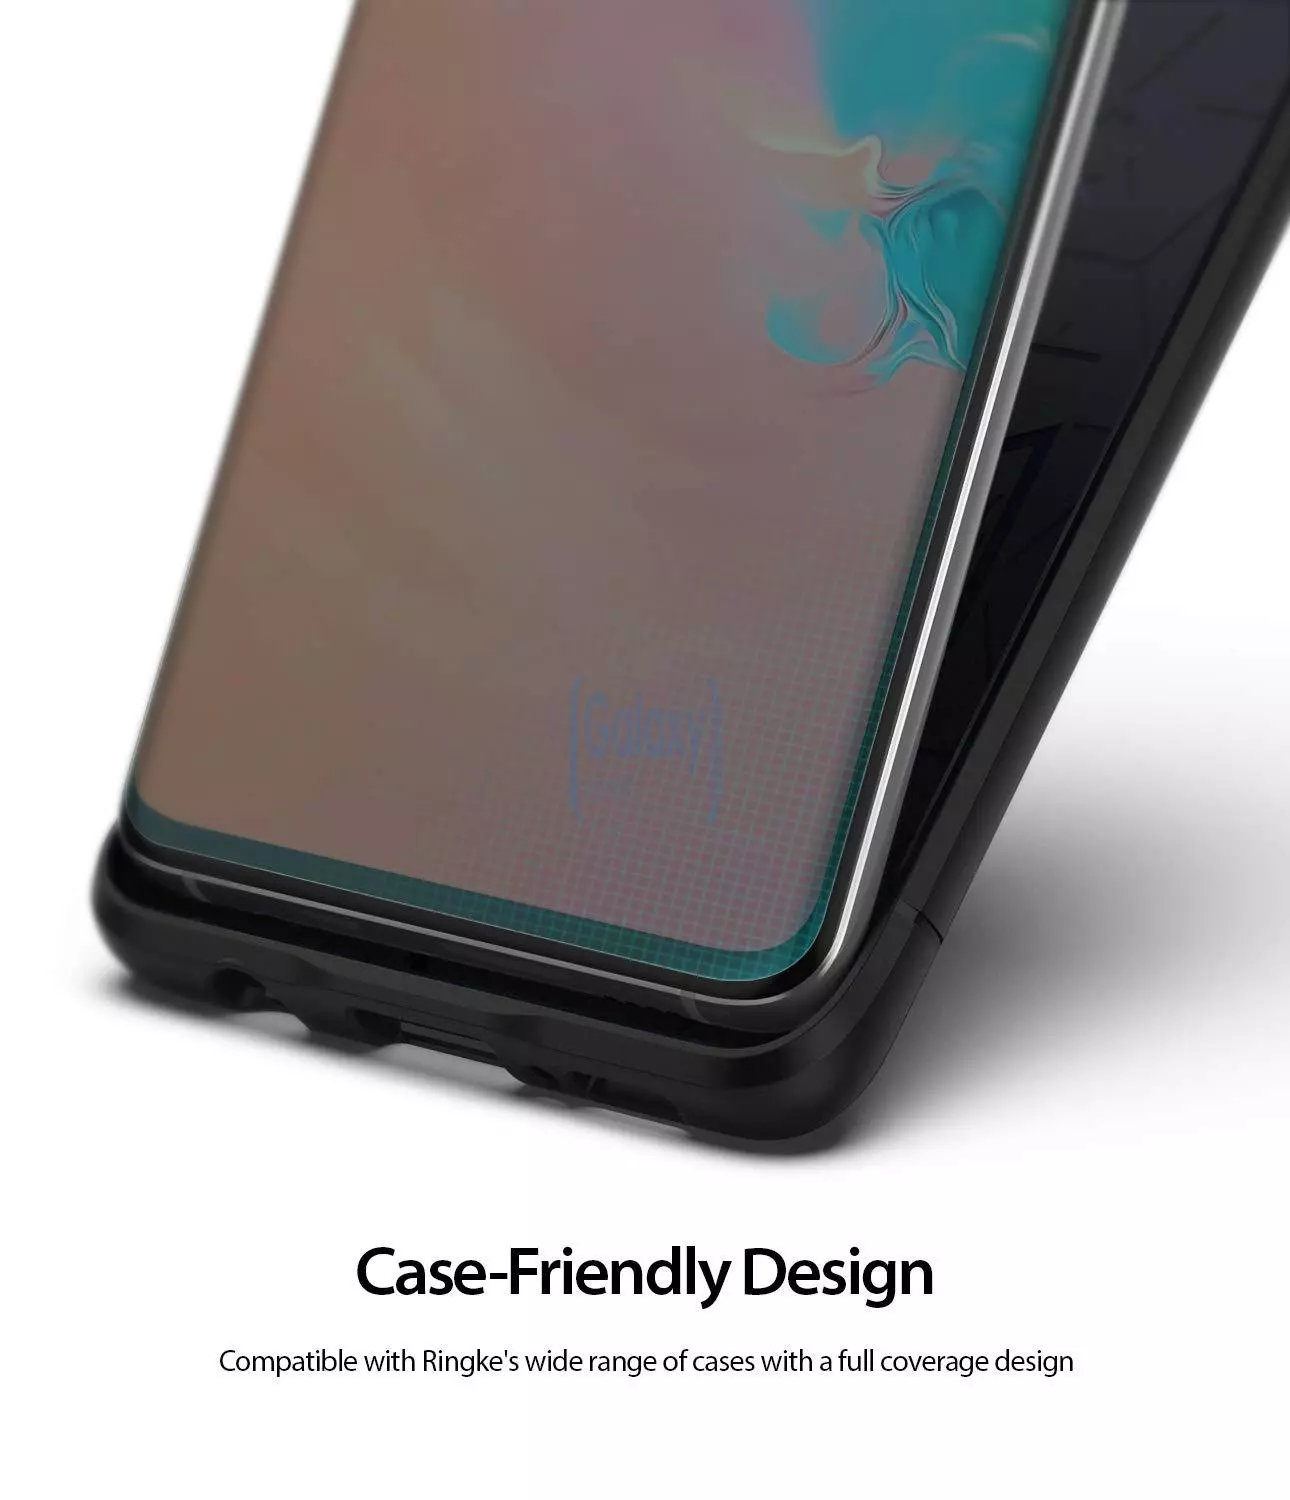 Защитная пленка Ringke Dual Easy Full Cover для Samsung Galaxy S10 Plus